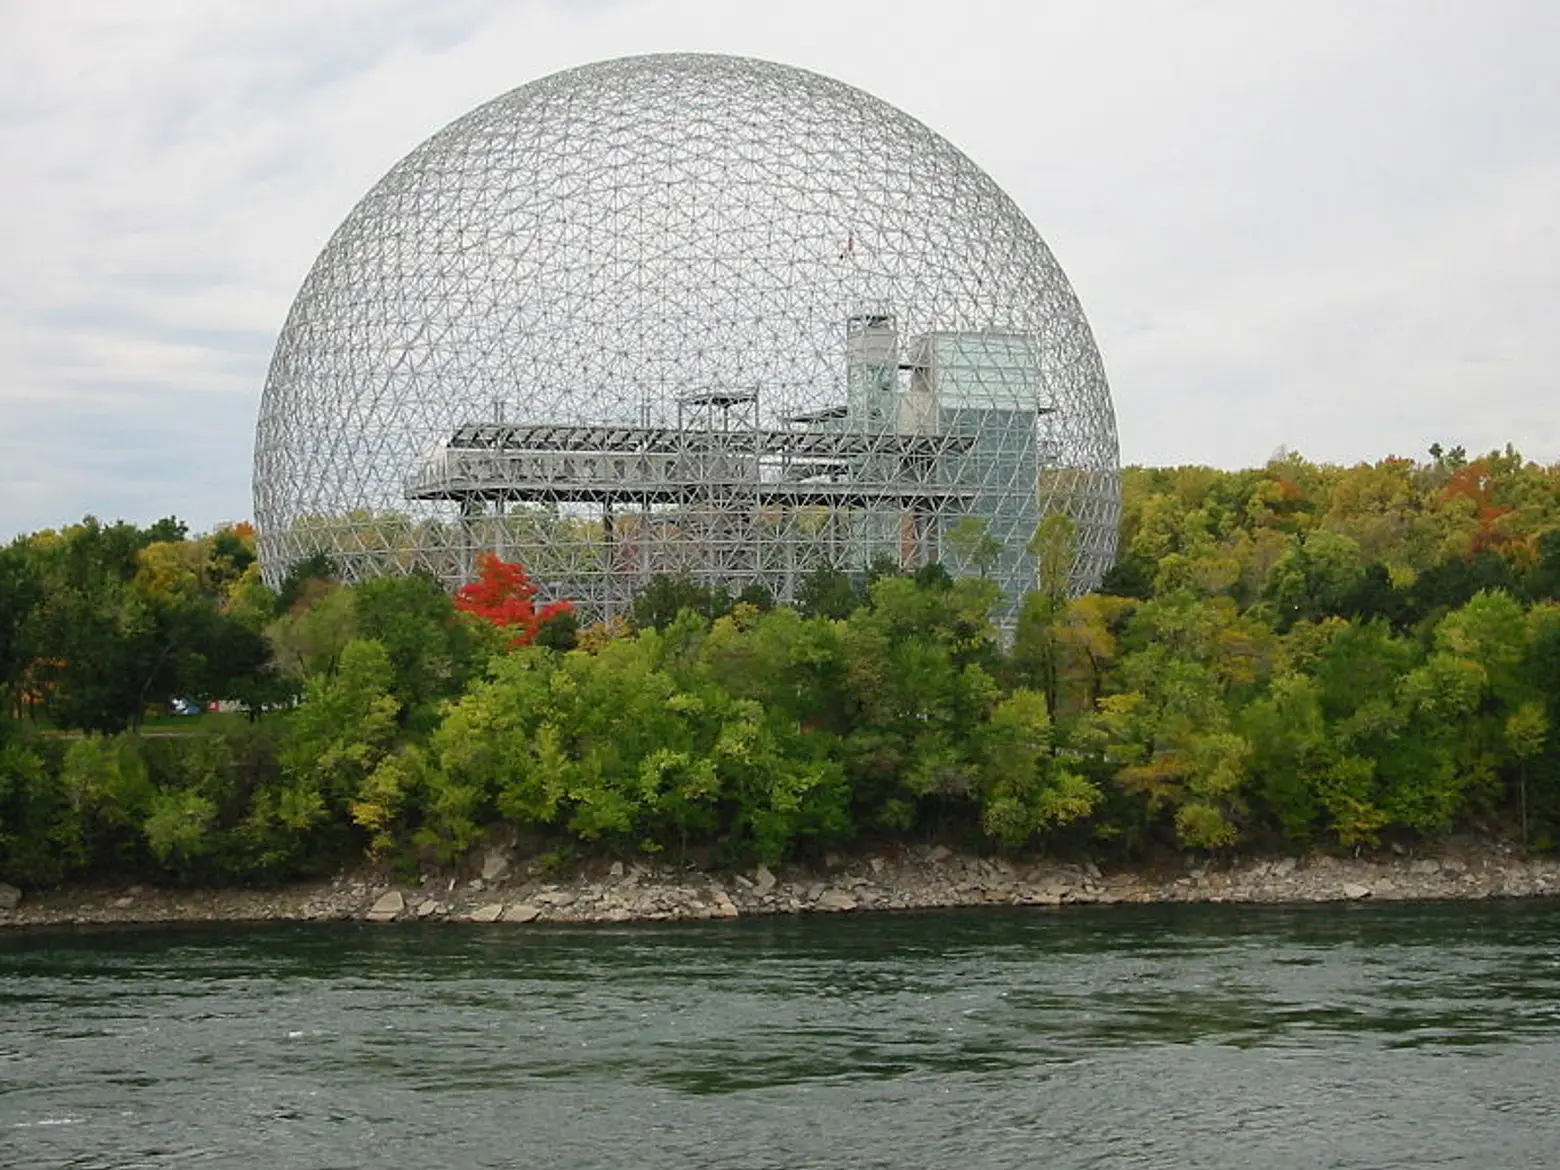 Buckminster Fuller Manhattan Geodesic Dome, Montreal biosphere